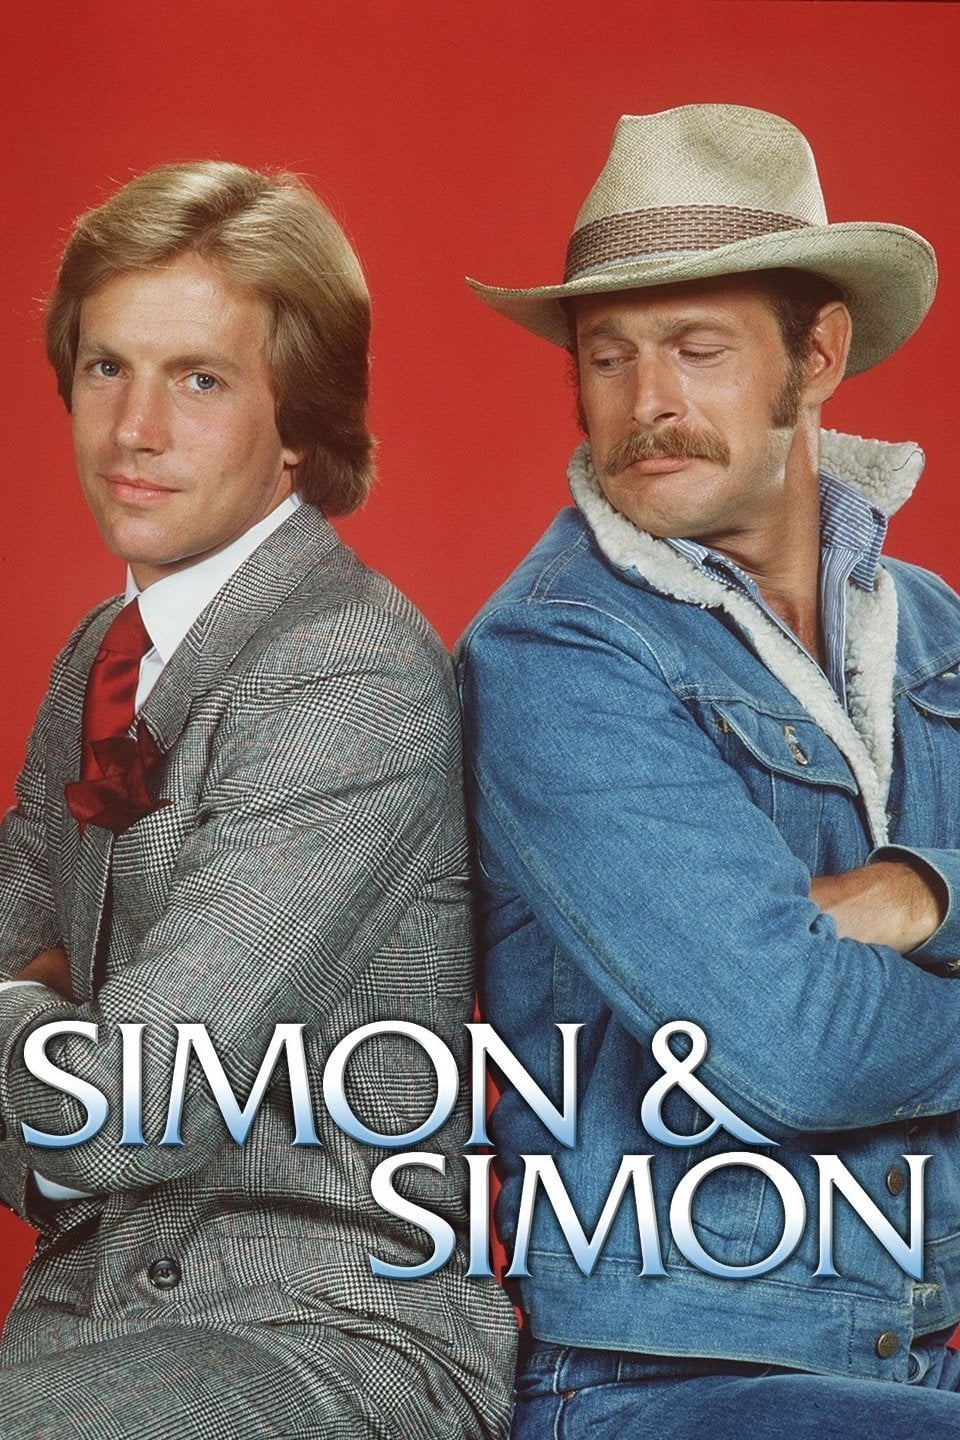 Simon & Simon TV Shows About Detective Agency